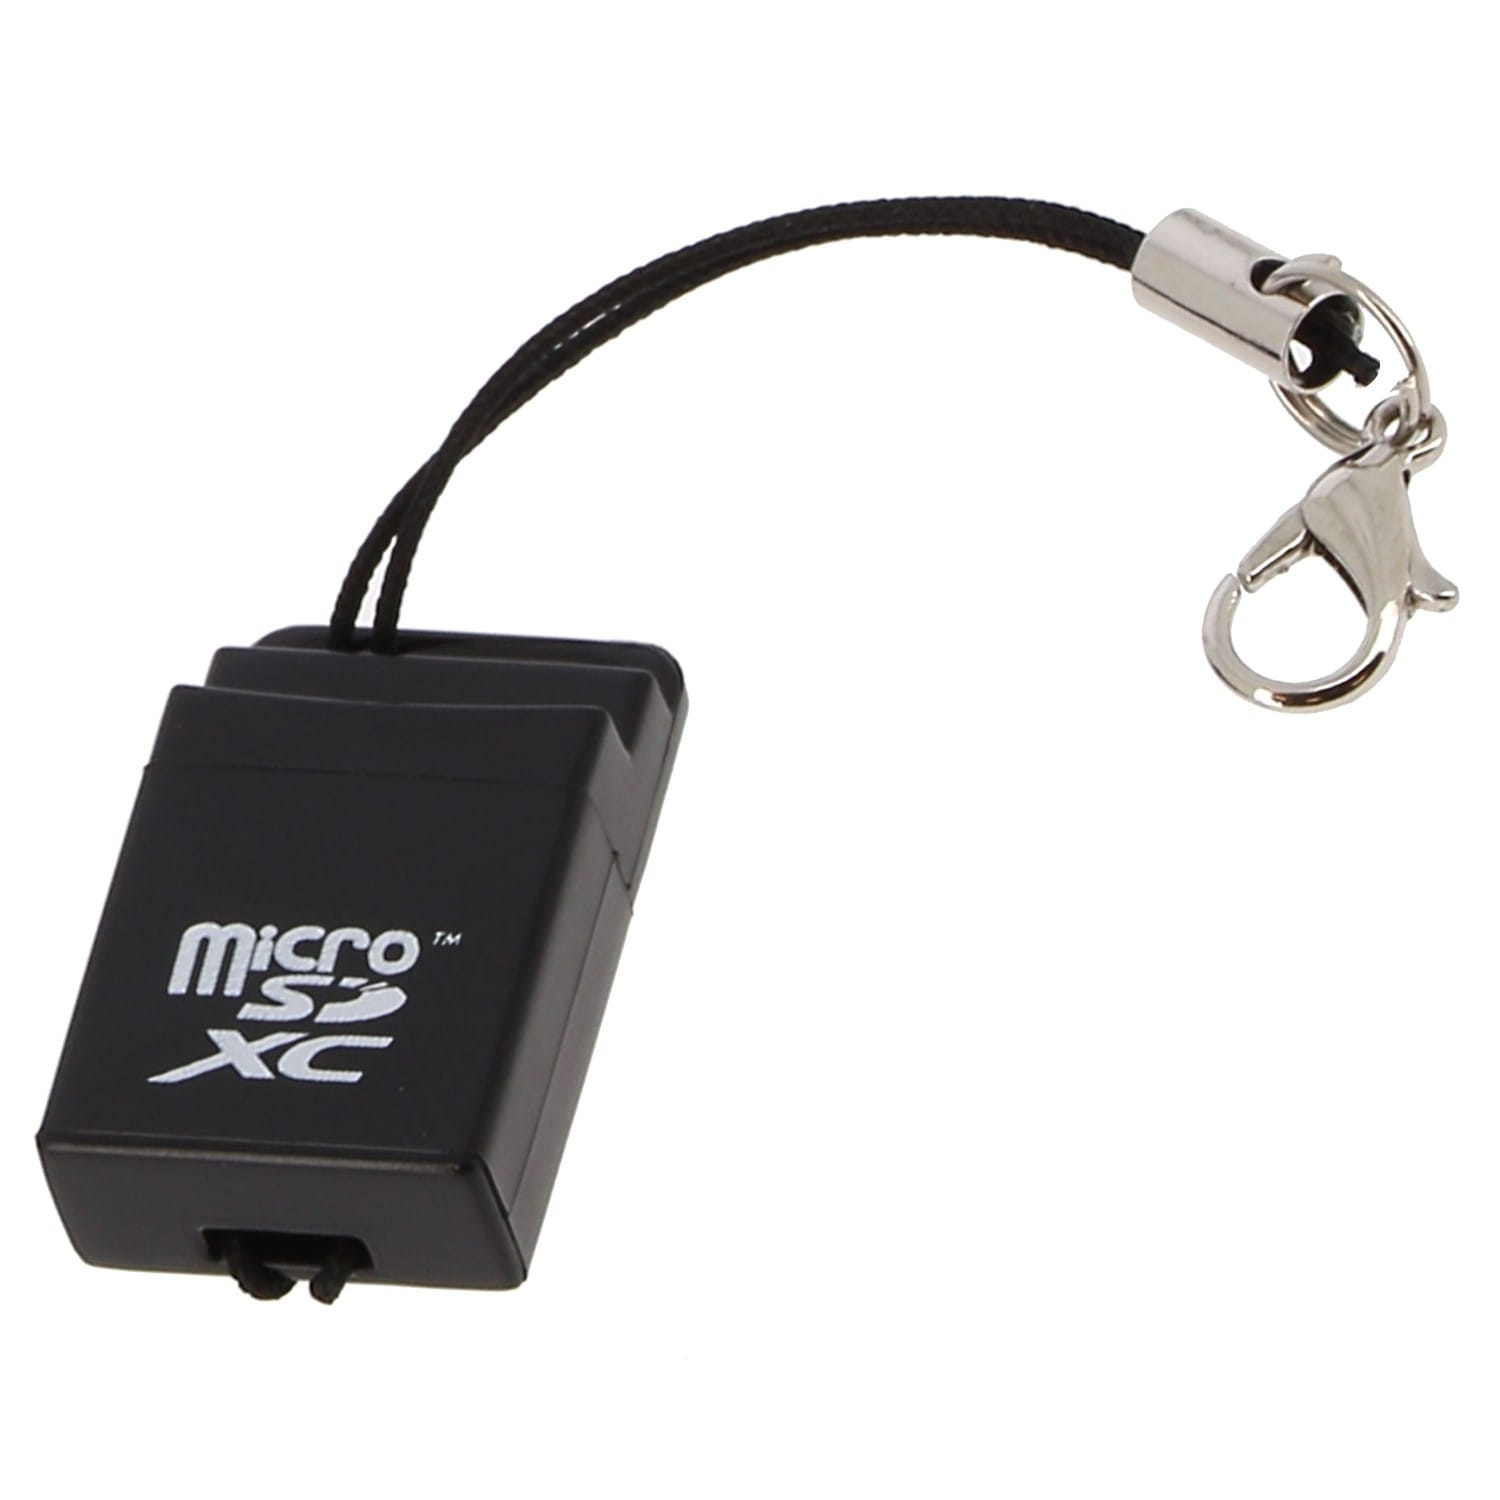 Lecteur multi-cartes USB 2.0 OTG Basic, SD/microSD, noir